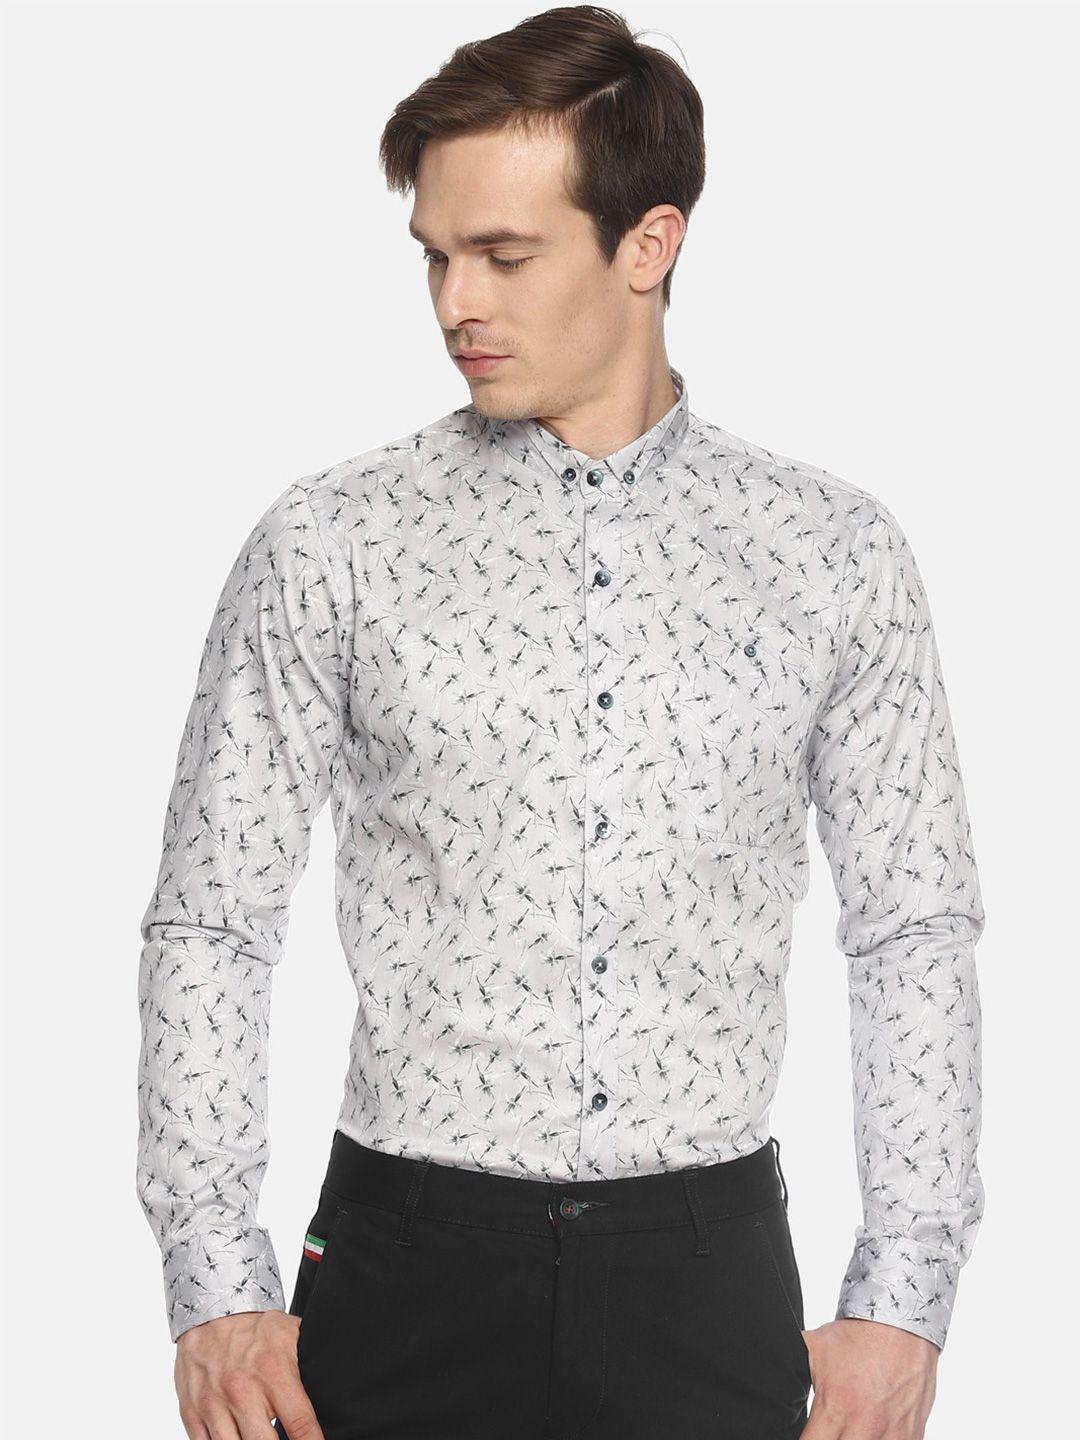 couper & coll men grey premium slim fit printed pure cotton casual shirt